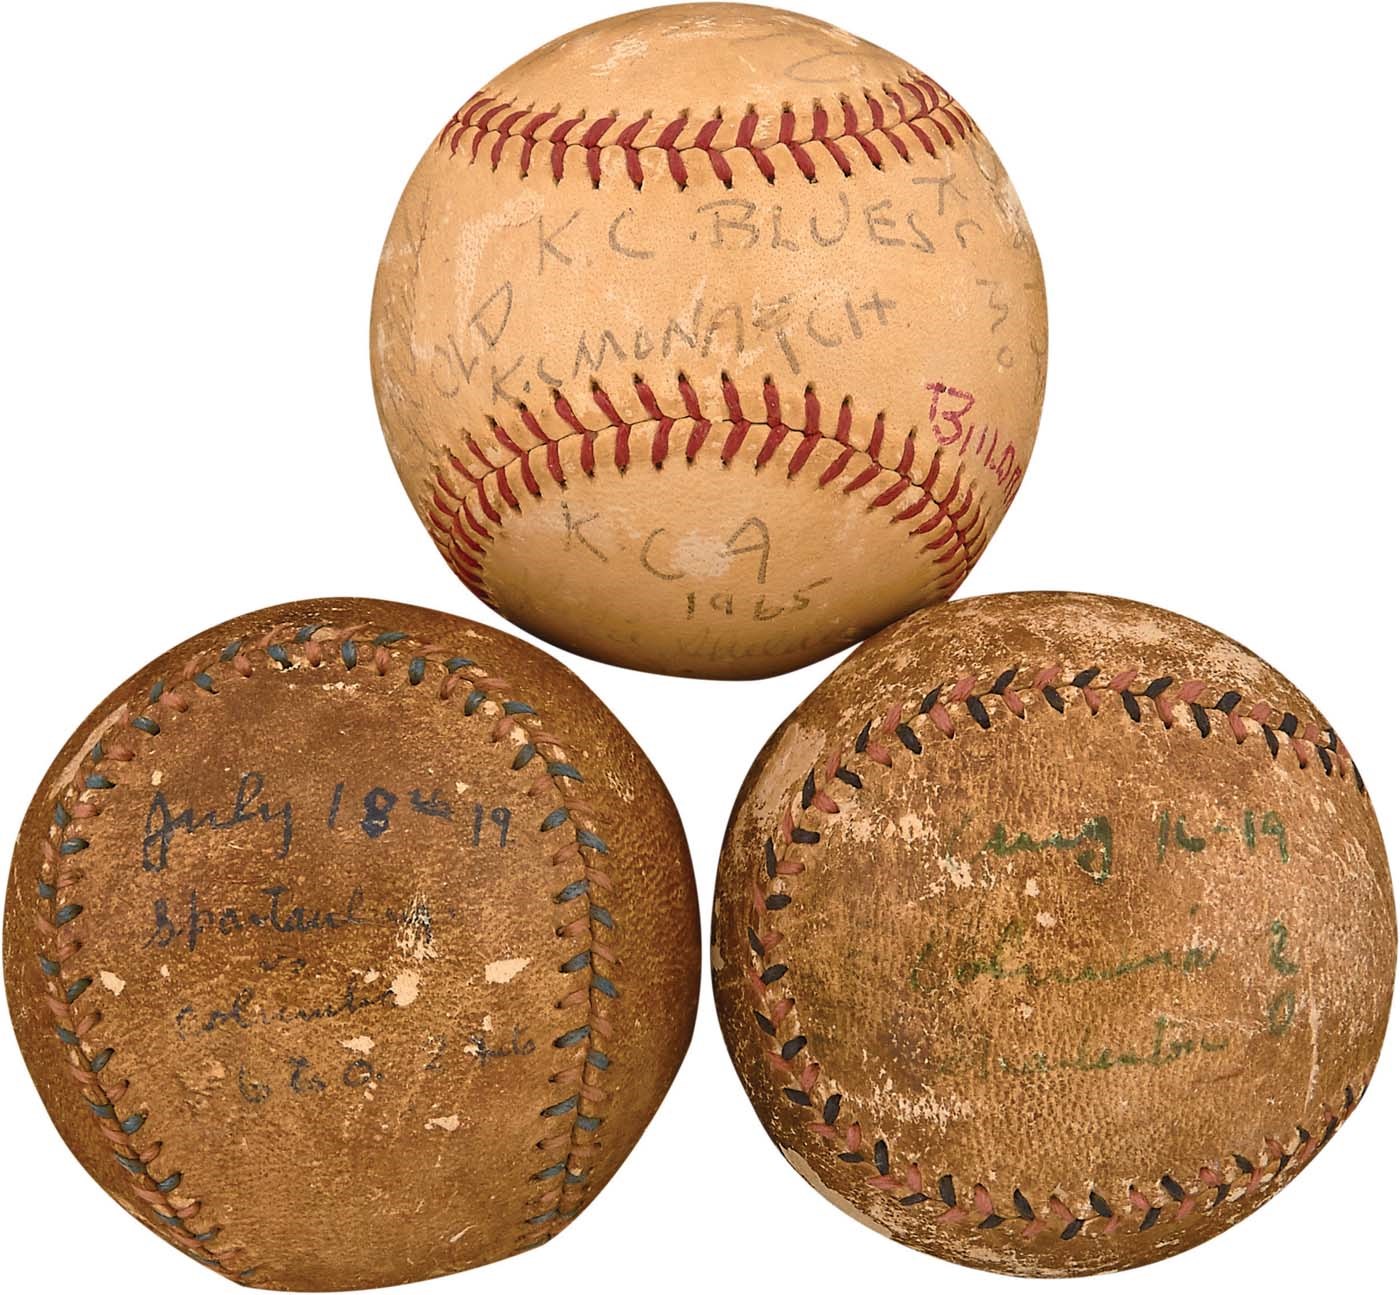 Negro League, Latin, Japanese & International Base - Historic 1965 Game Used Baseball from Satchel Paige's Last Game